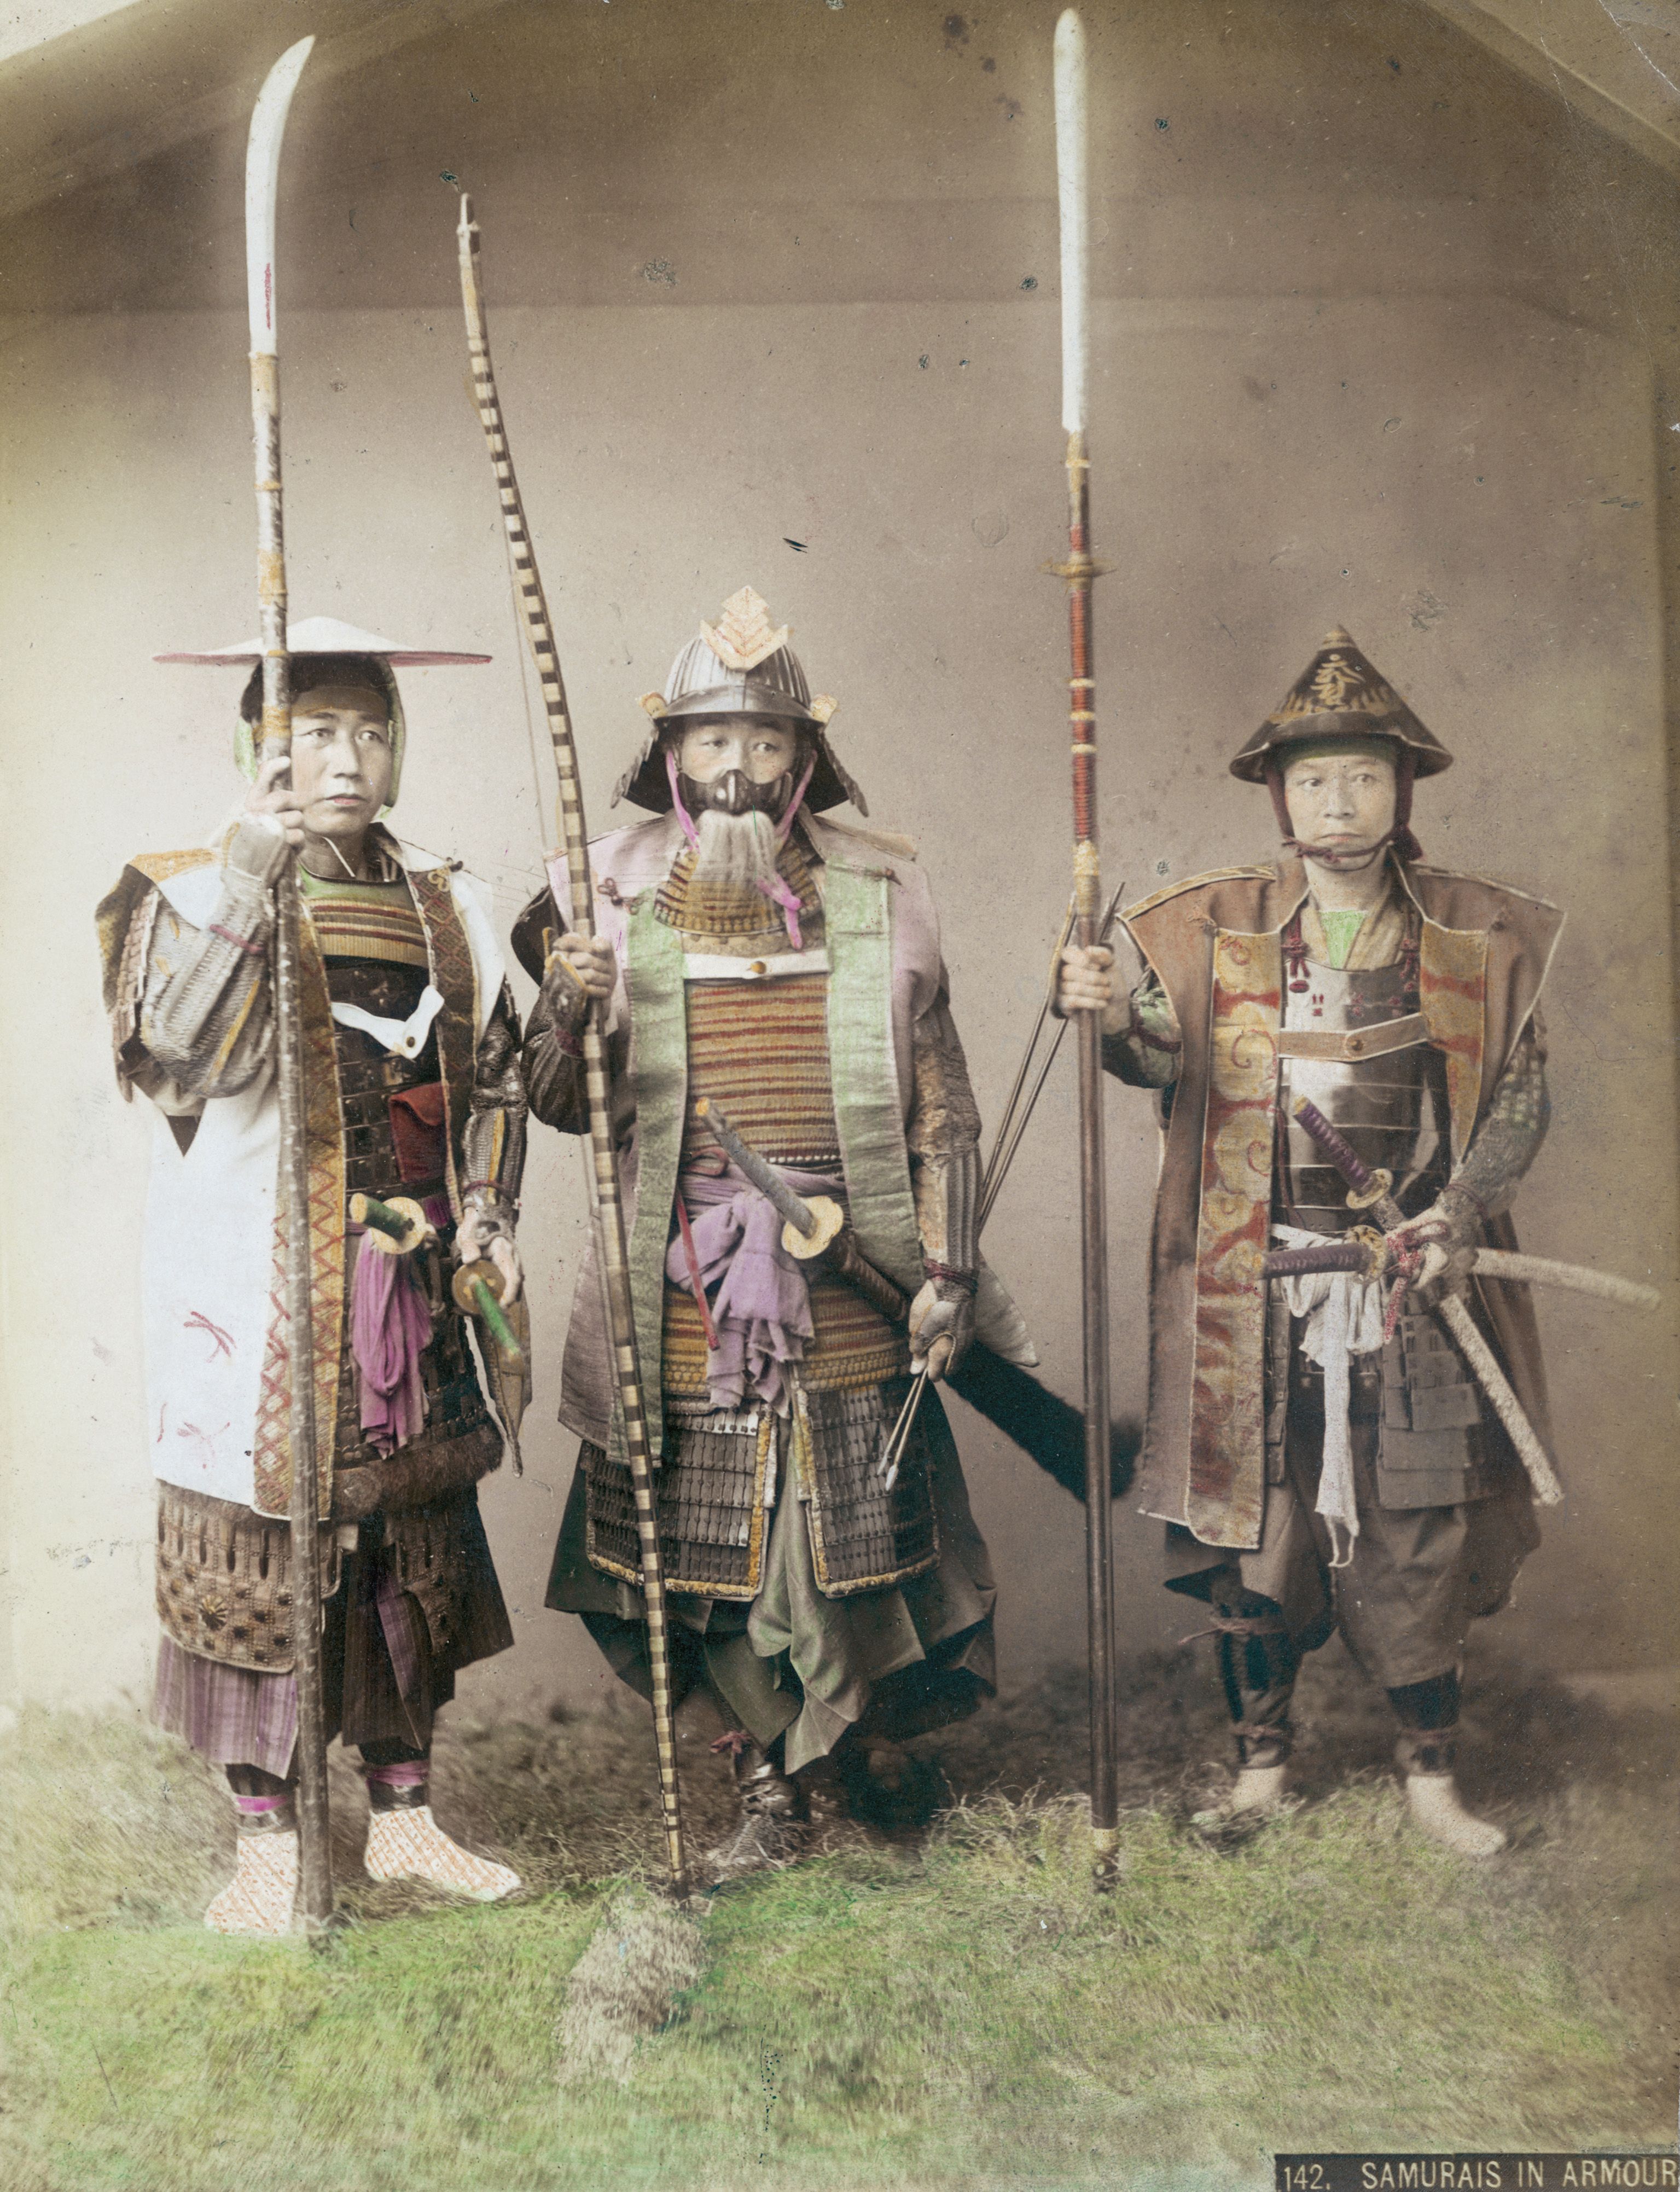 https://media.cnn.com/api/v1/images/stellar/prod/150715132649-three-samurai-warriors-in-armor.jpg?q=w_3071,h_4006,x_0,y_0,c_fill